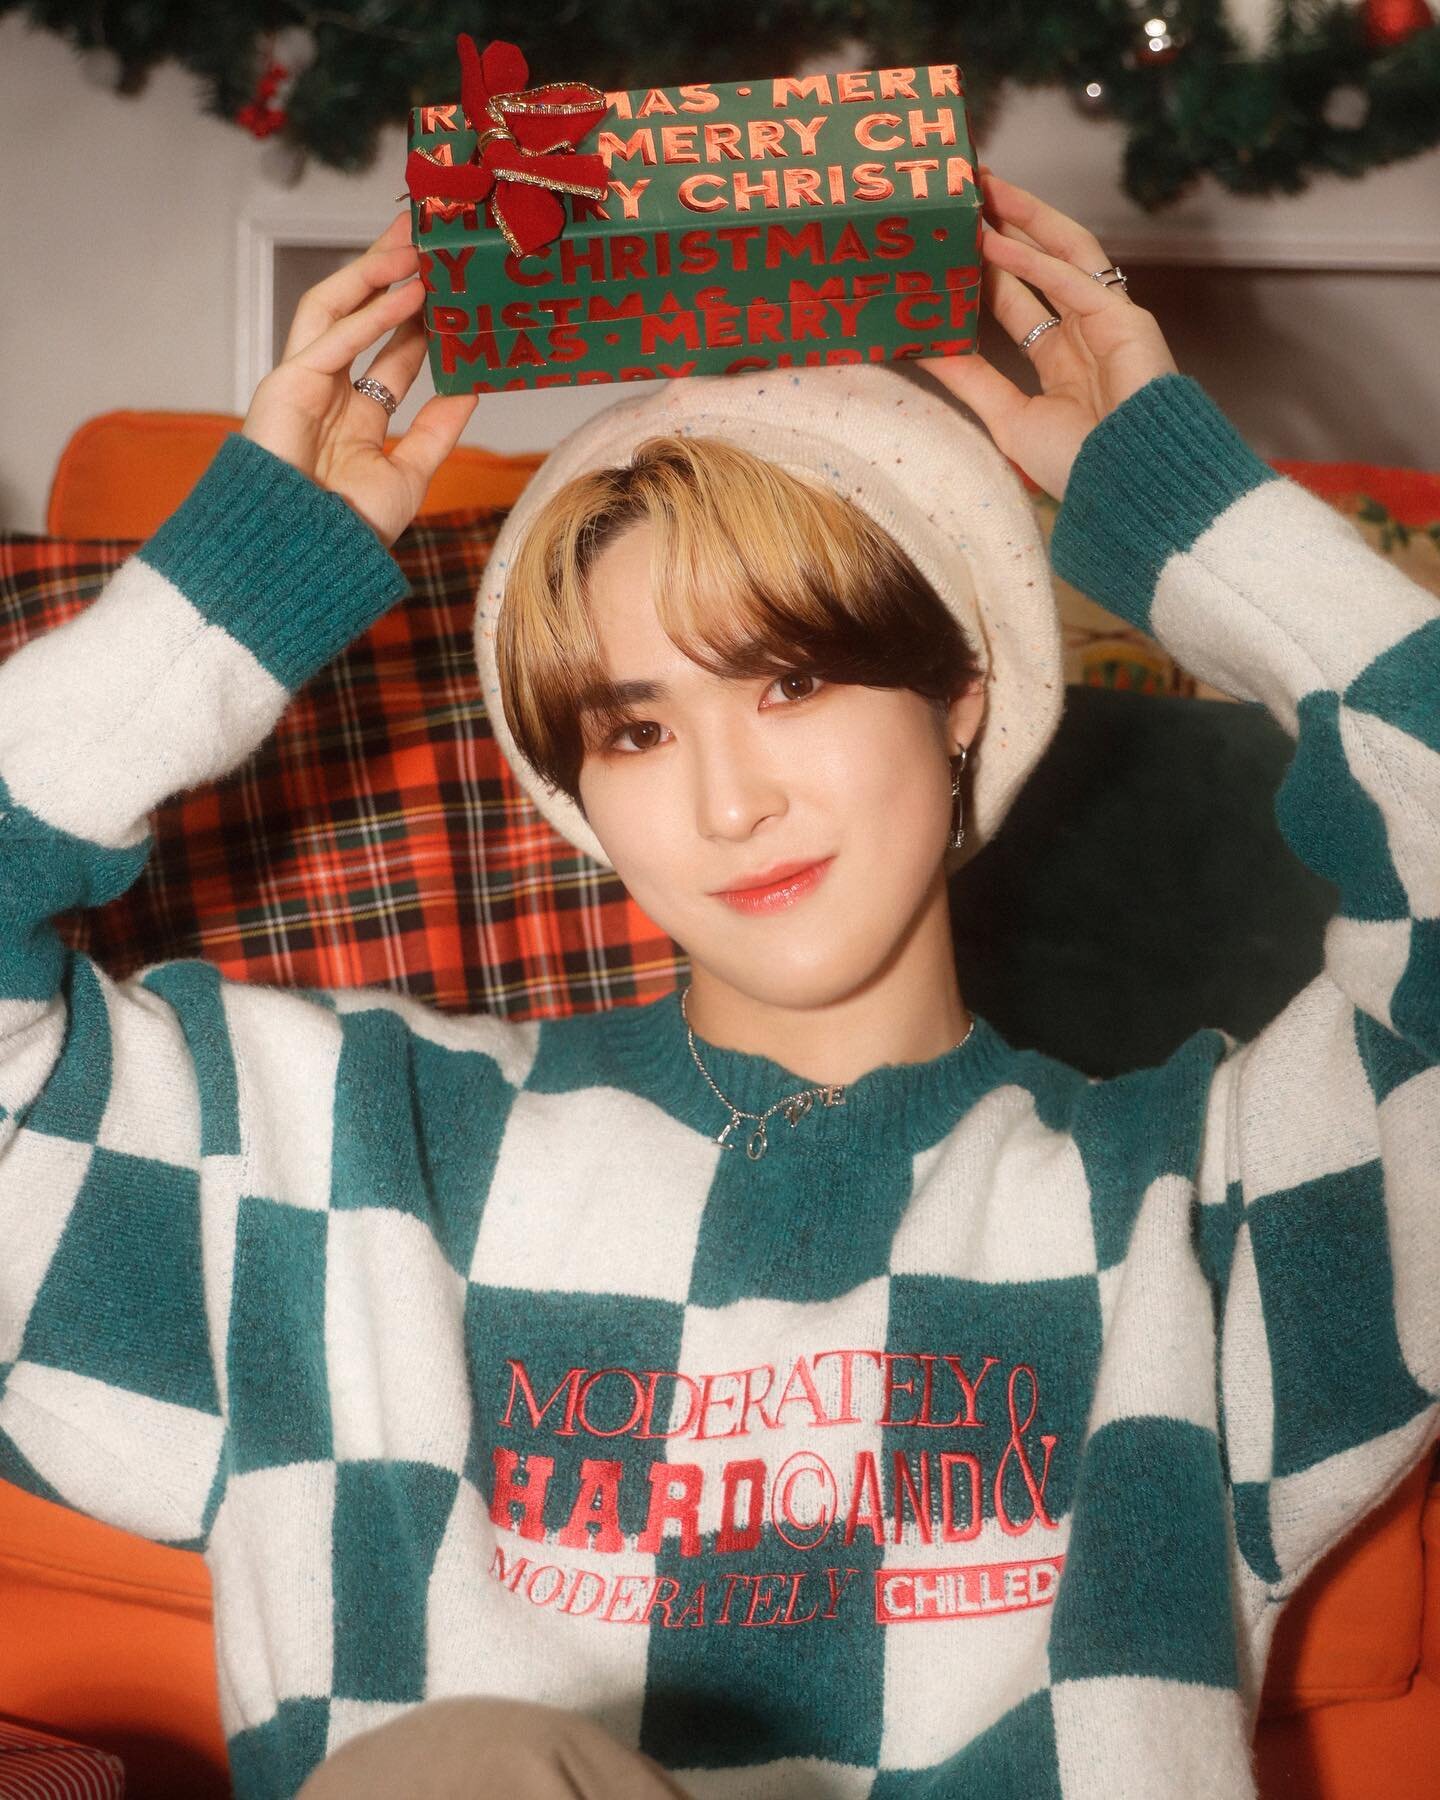 [🎁] Winter Special Photo

🎄 𝑴𝒆𝒓𝒓𝒚 𝑪𝒉𝒓𝒊𝒔𝒕𝒎𝒂𝒔 𝒘𝒊𝒕𝒉 𝑵𝑰𝑵𝑬.𝒊 🎄

#NINEi #나인아이